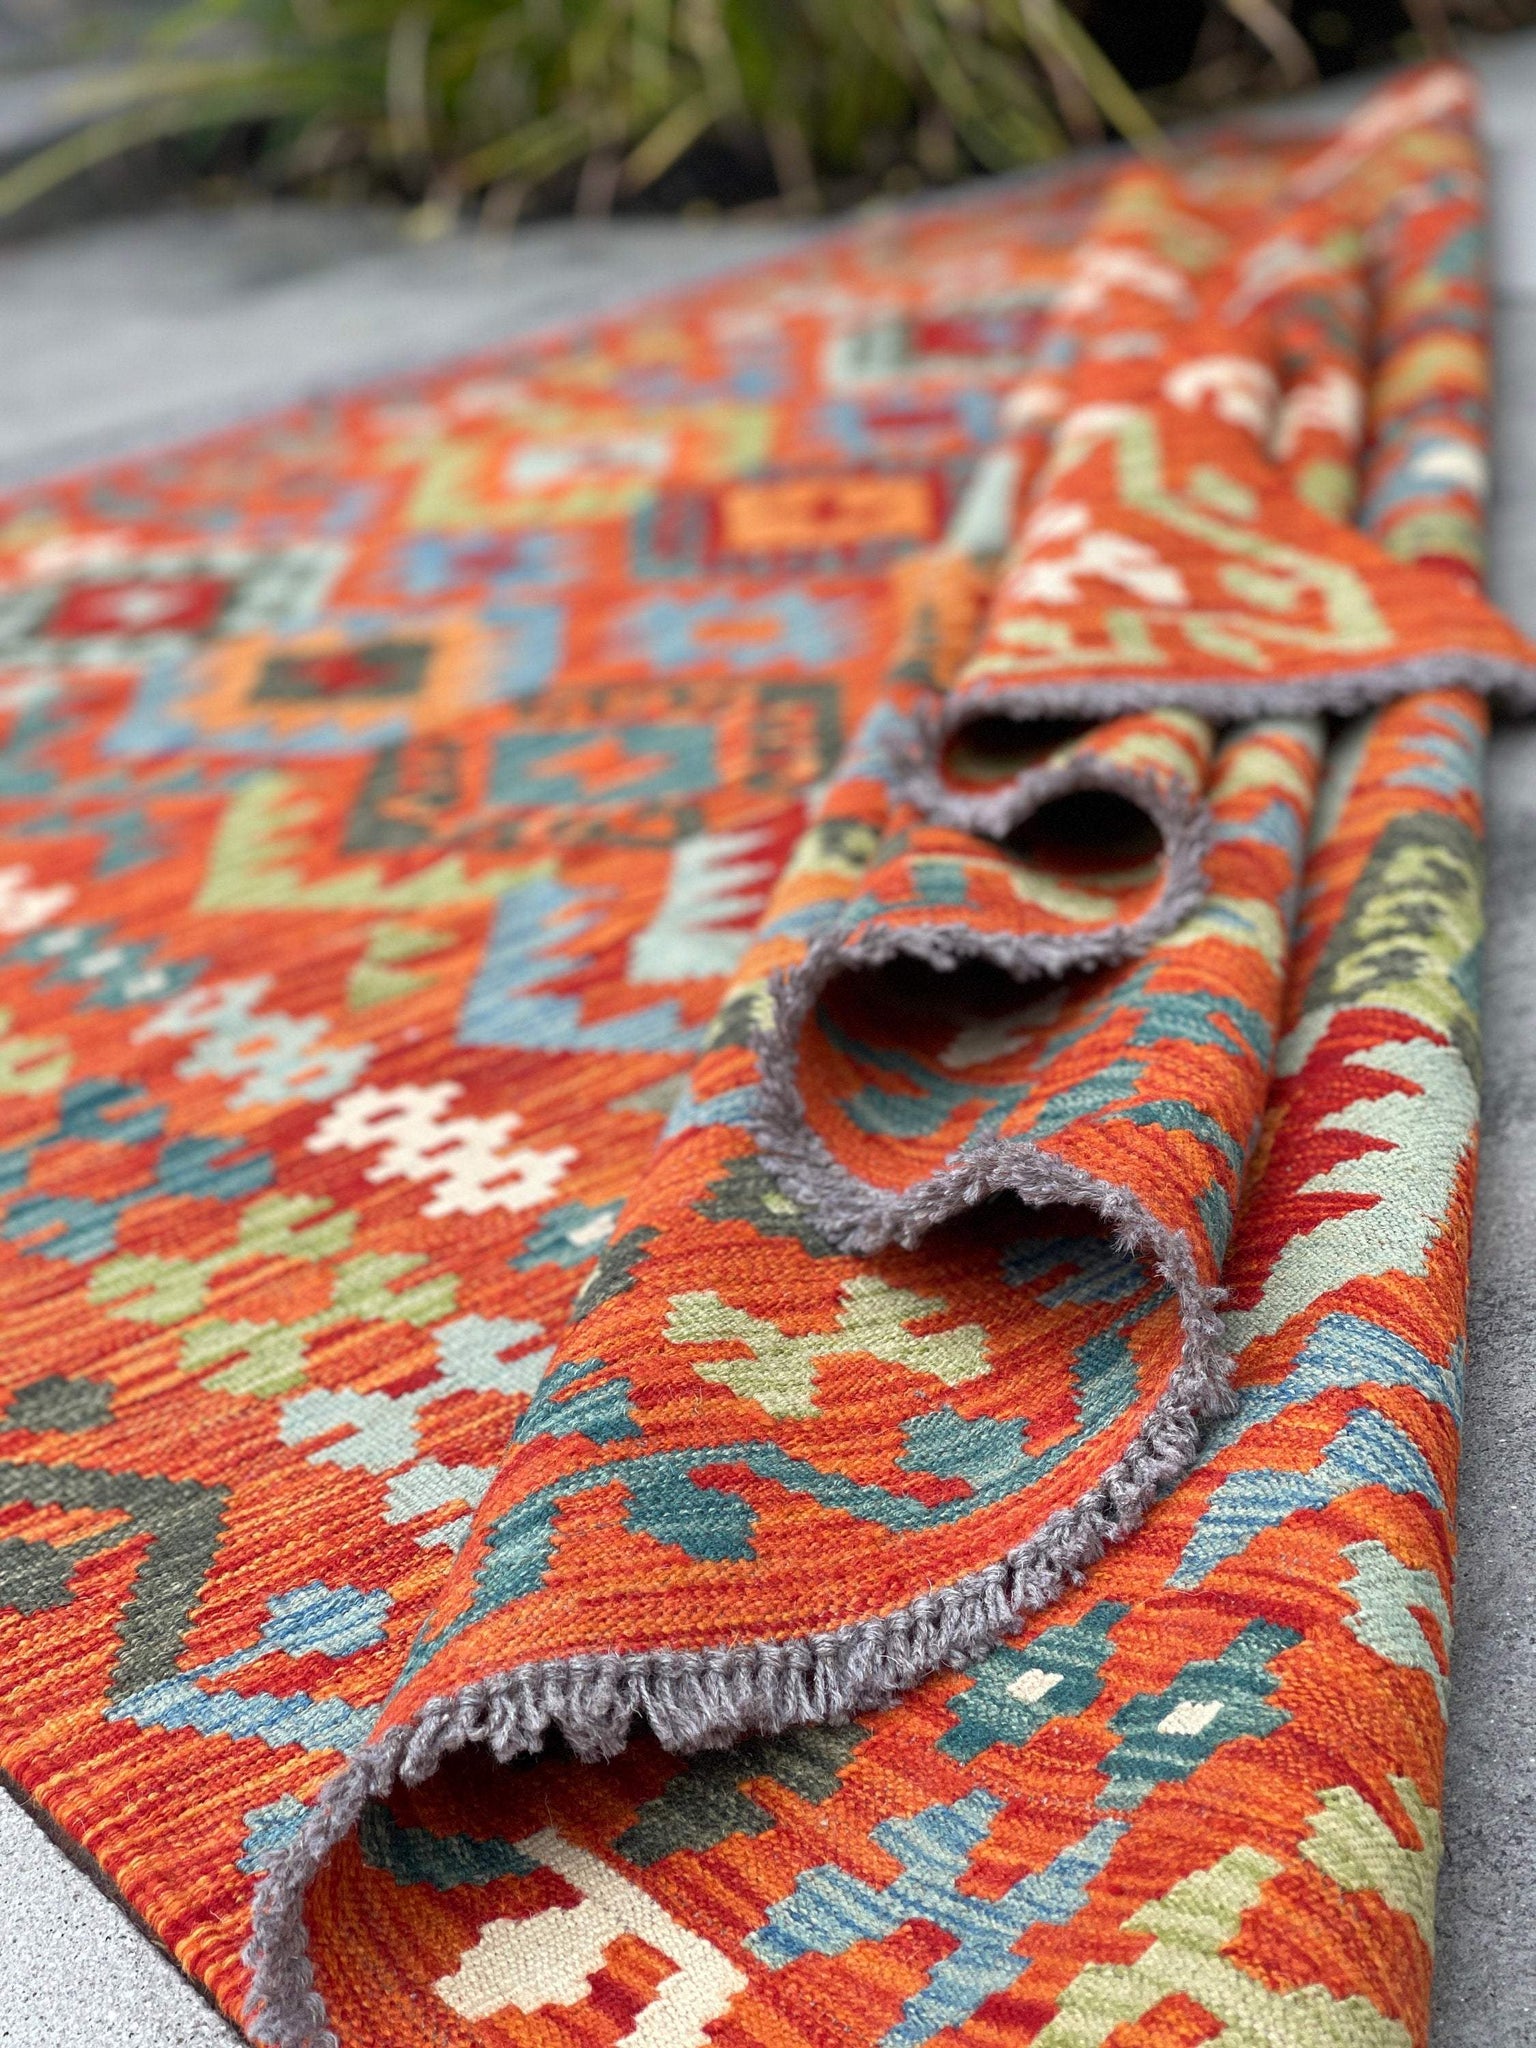 5x6 (150x180) Handmade Afghan Kilim Rug | Burnt Orange Red Sage Turquoise | Flatweave Boho Tribal Turkish Moroccan Oriental Wool Outdoor